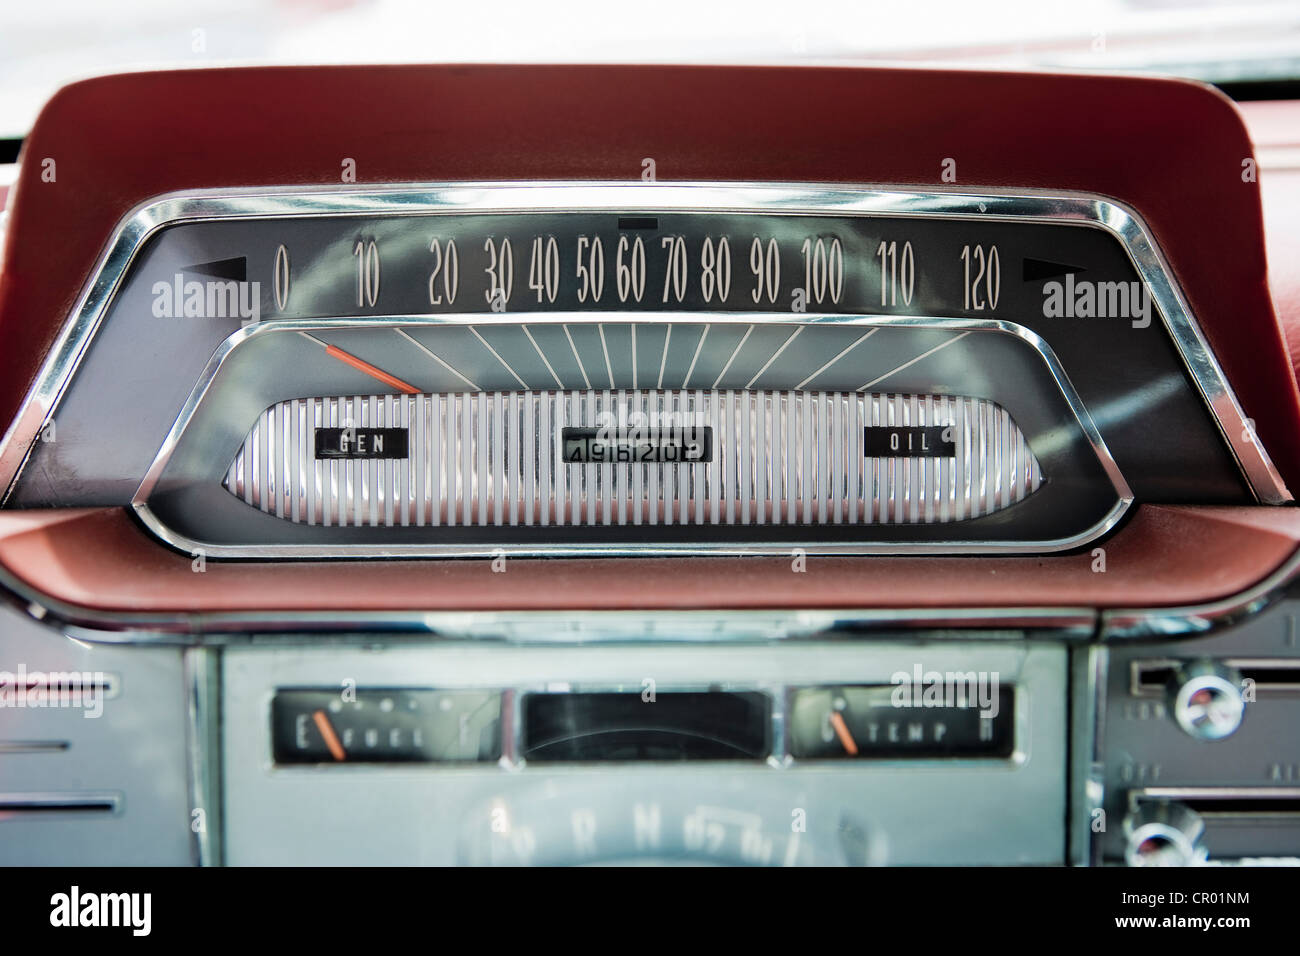 kool Democratie Goed gevoel Vintage car radio hi-res stock photography and images - Alamy